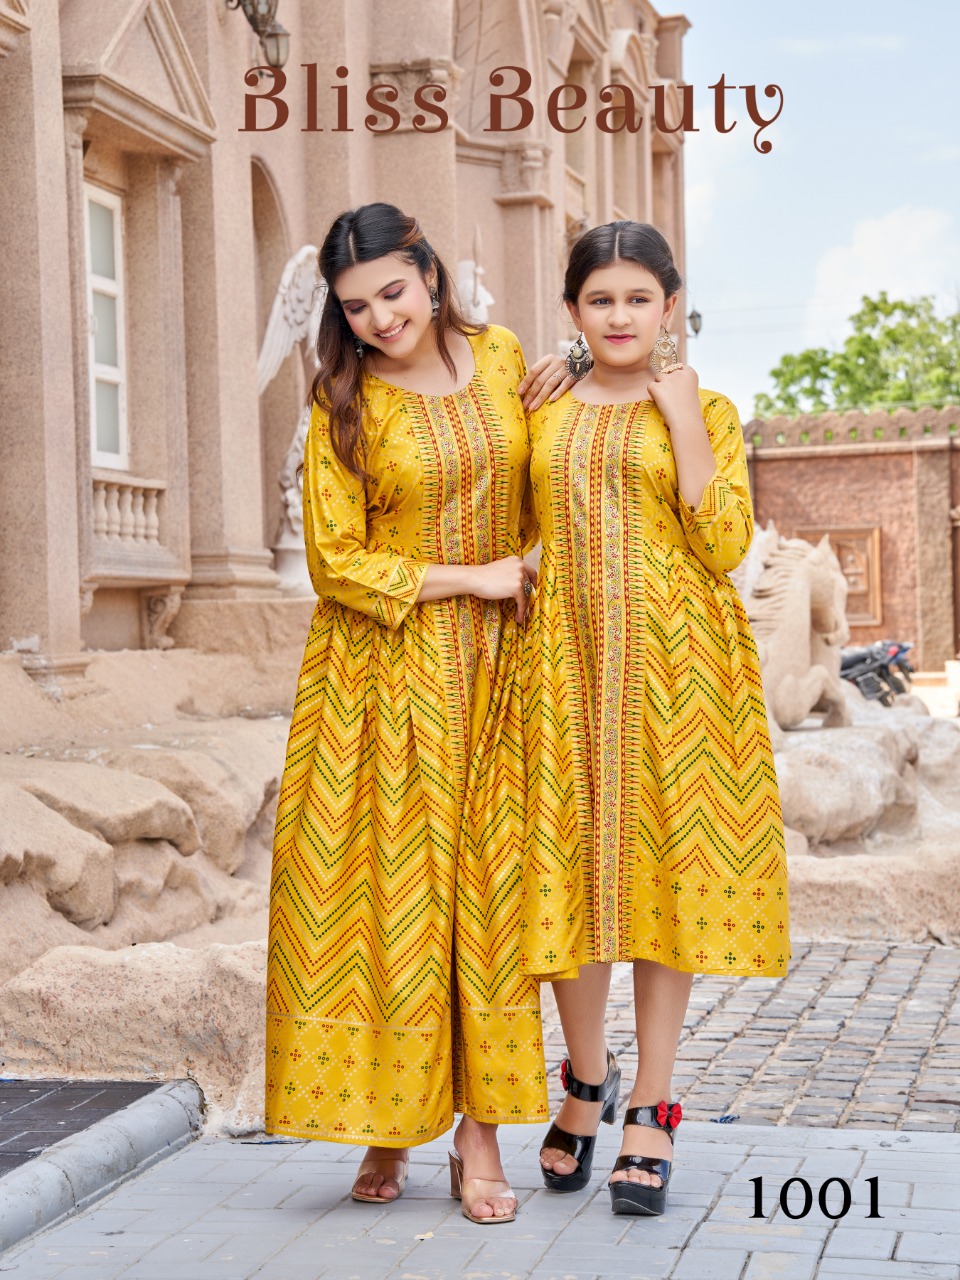 banwery fashion me and mom v 5 rayon attractivr look kurti catalog